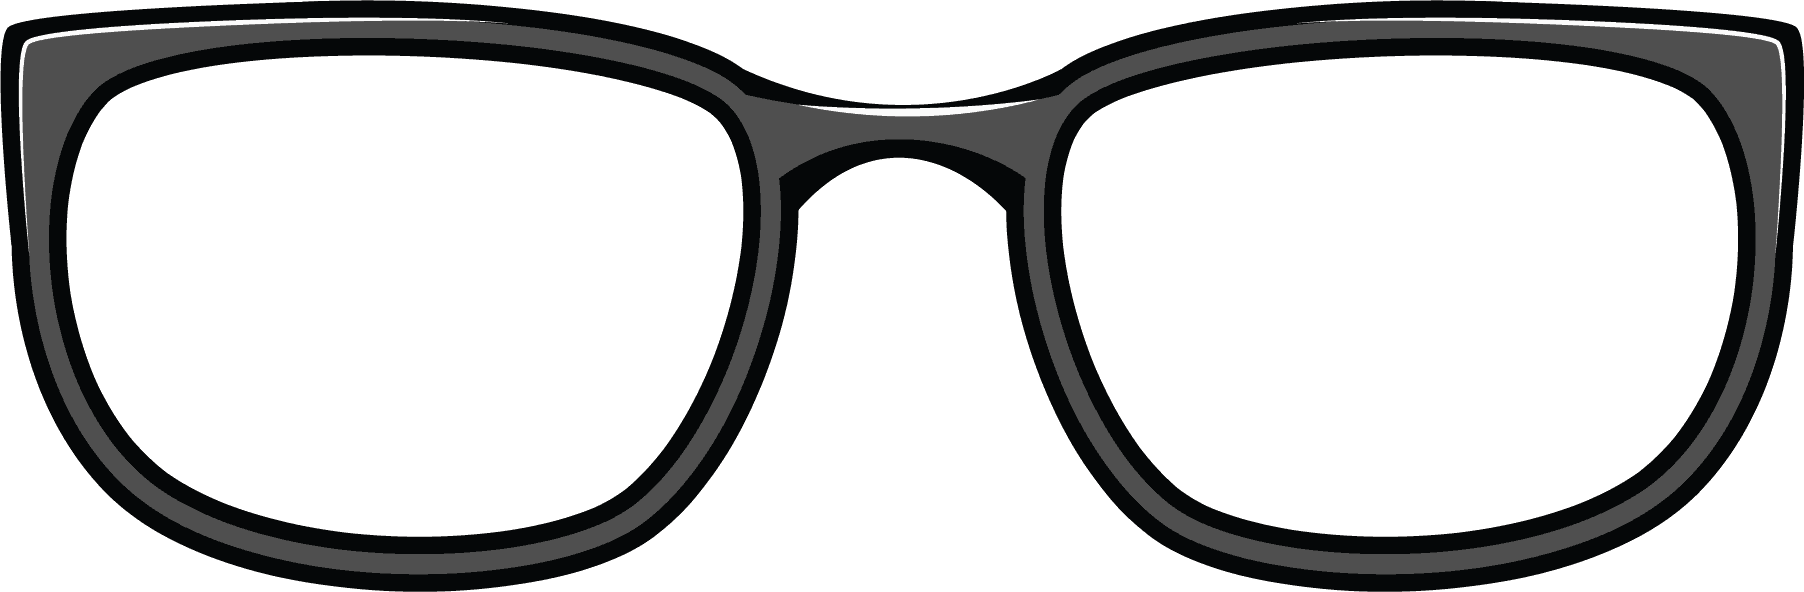 Sunglasses shades stock vector clipart image